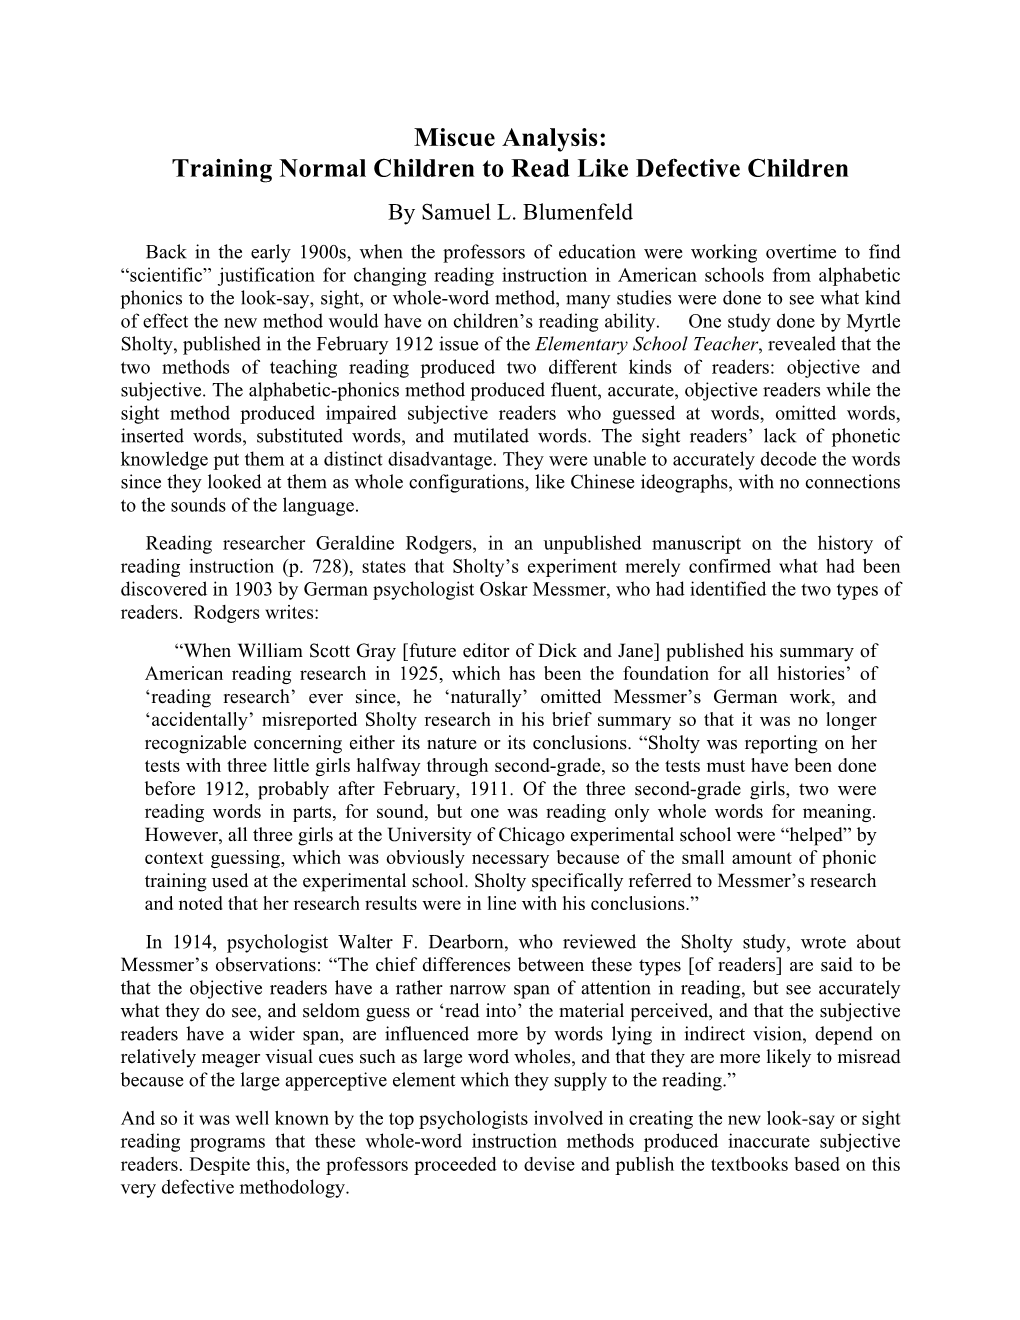 Miscue Analysis: Training Normal Children to Read Like Defective Children